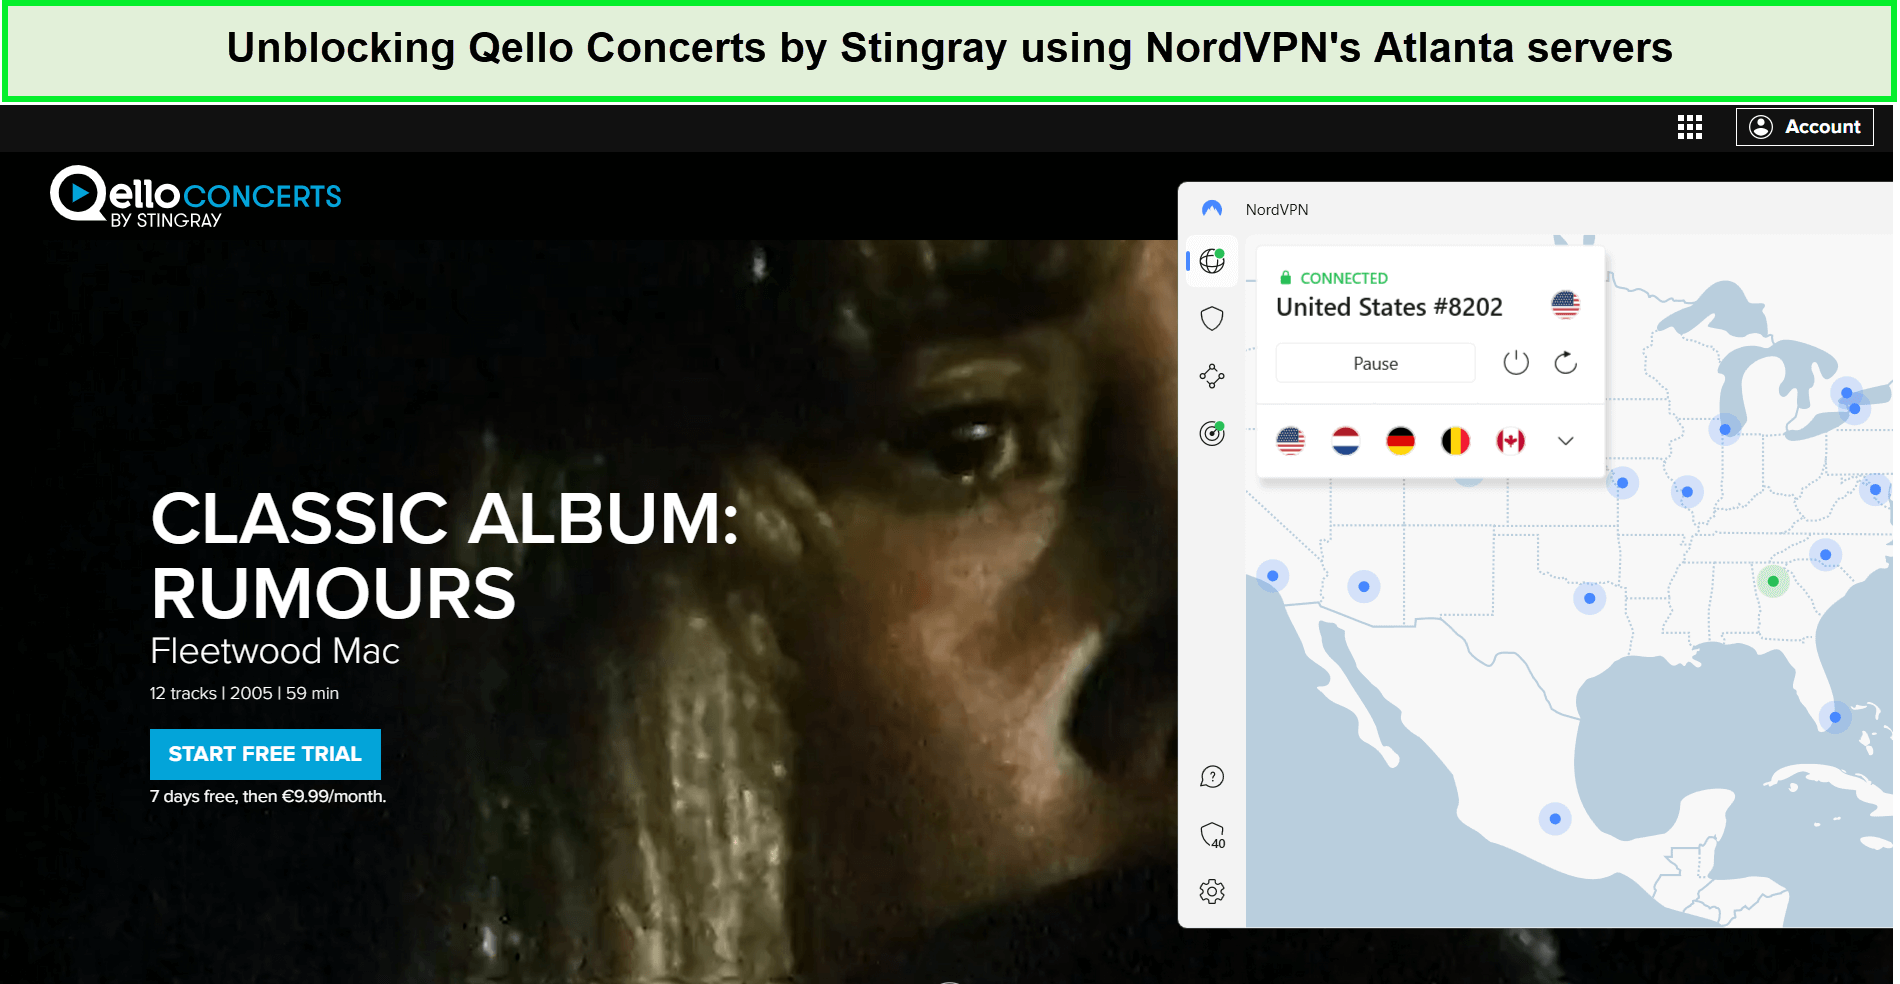 qello-concerts-by-stingray-in-Australia-unblocked-nordvpn